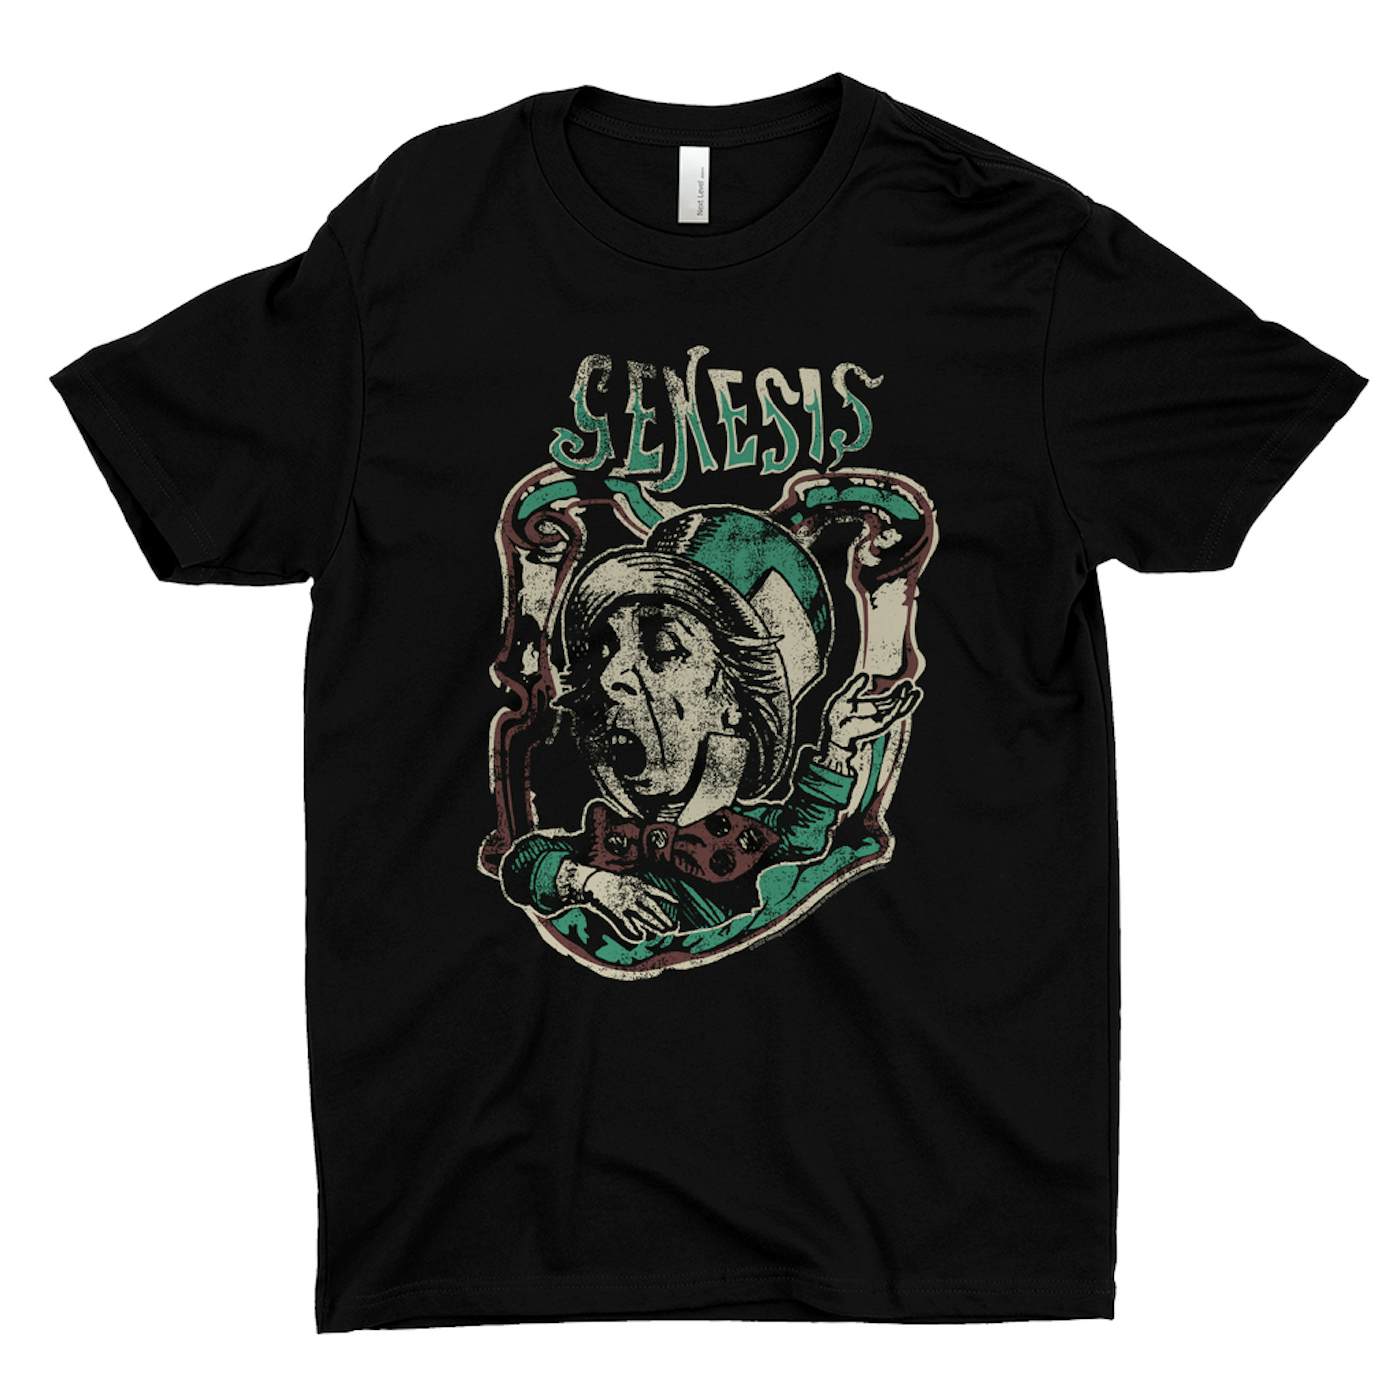 Genesis T-Shirt | Genesis And The Mad Hatter Distressed Genesis Shirt